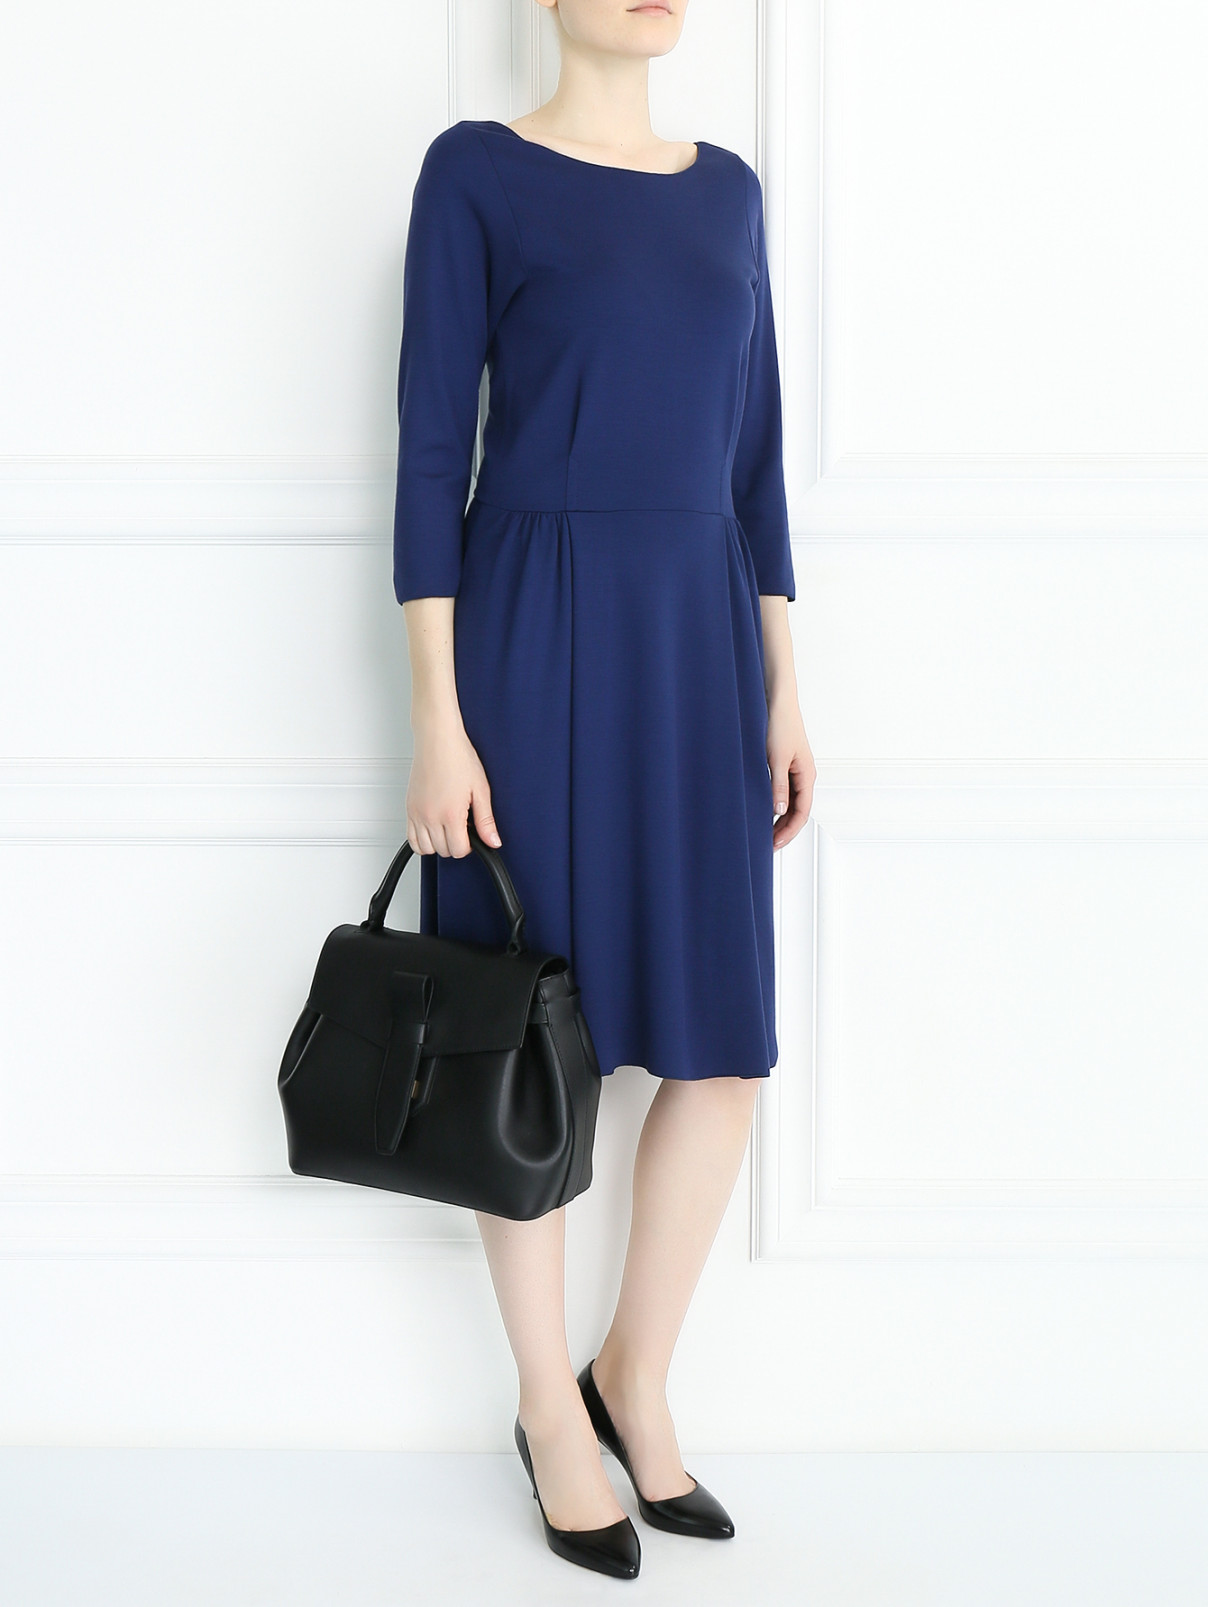 Платье-миди со складками Armani Collezioni  –  Модель Общий вид  – Цвет:  Синий